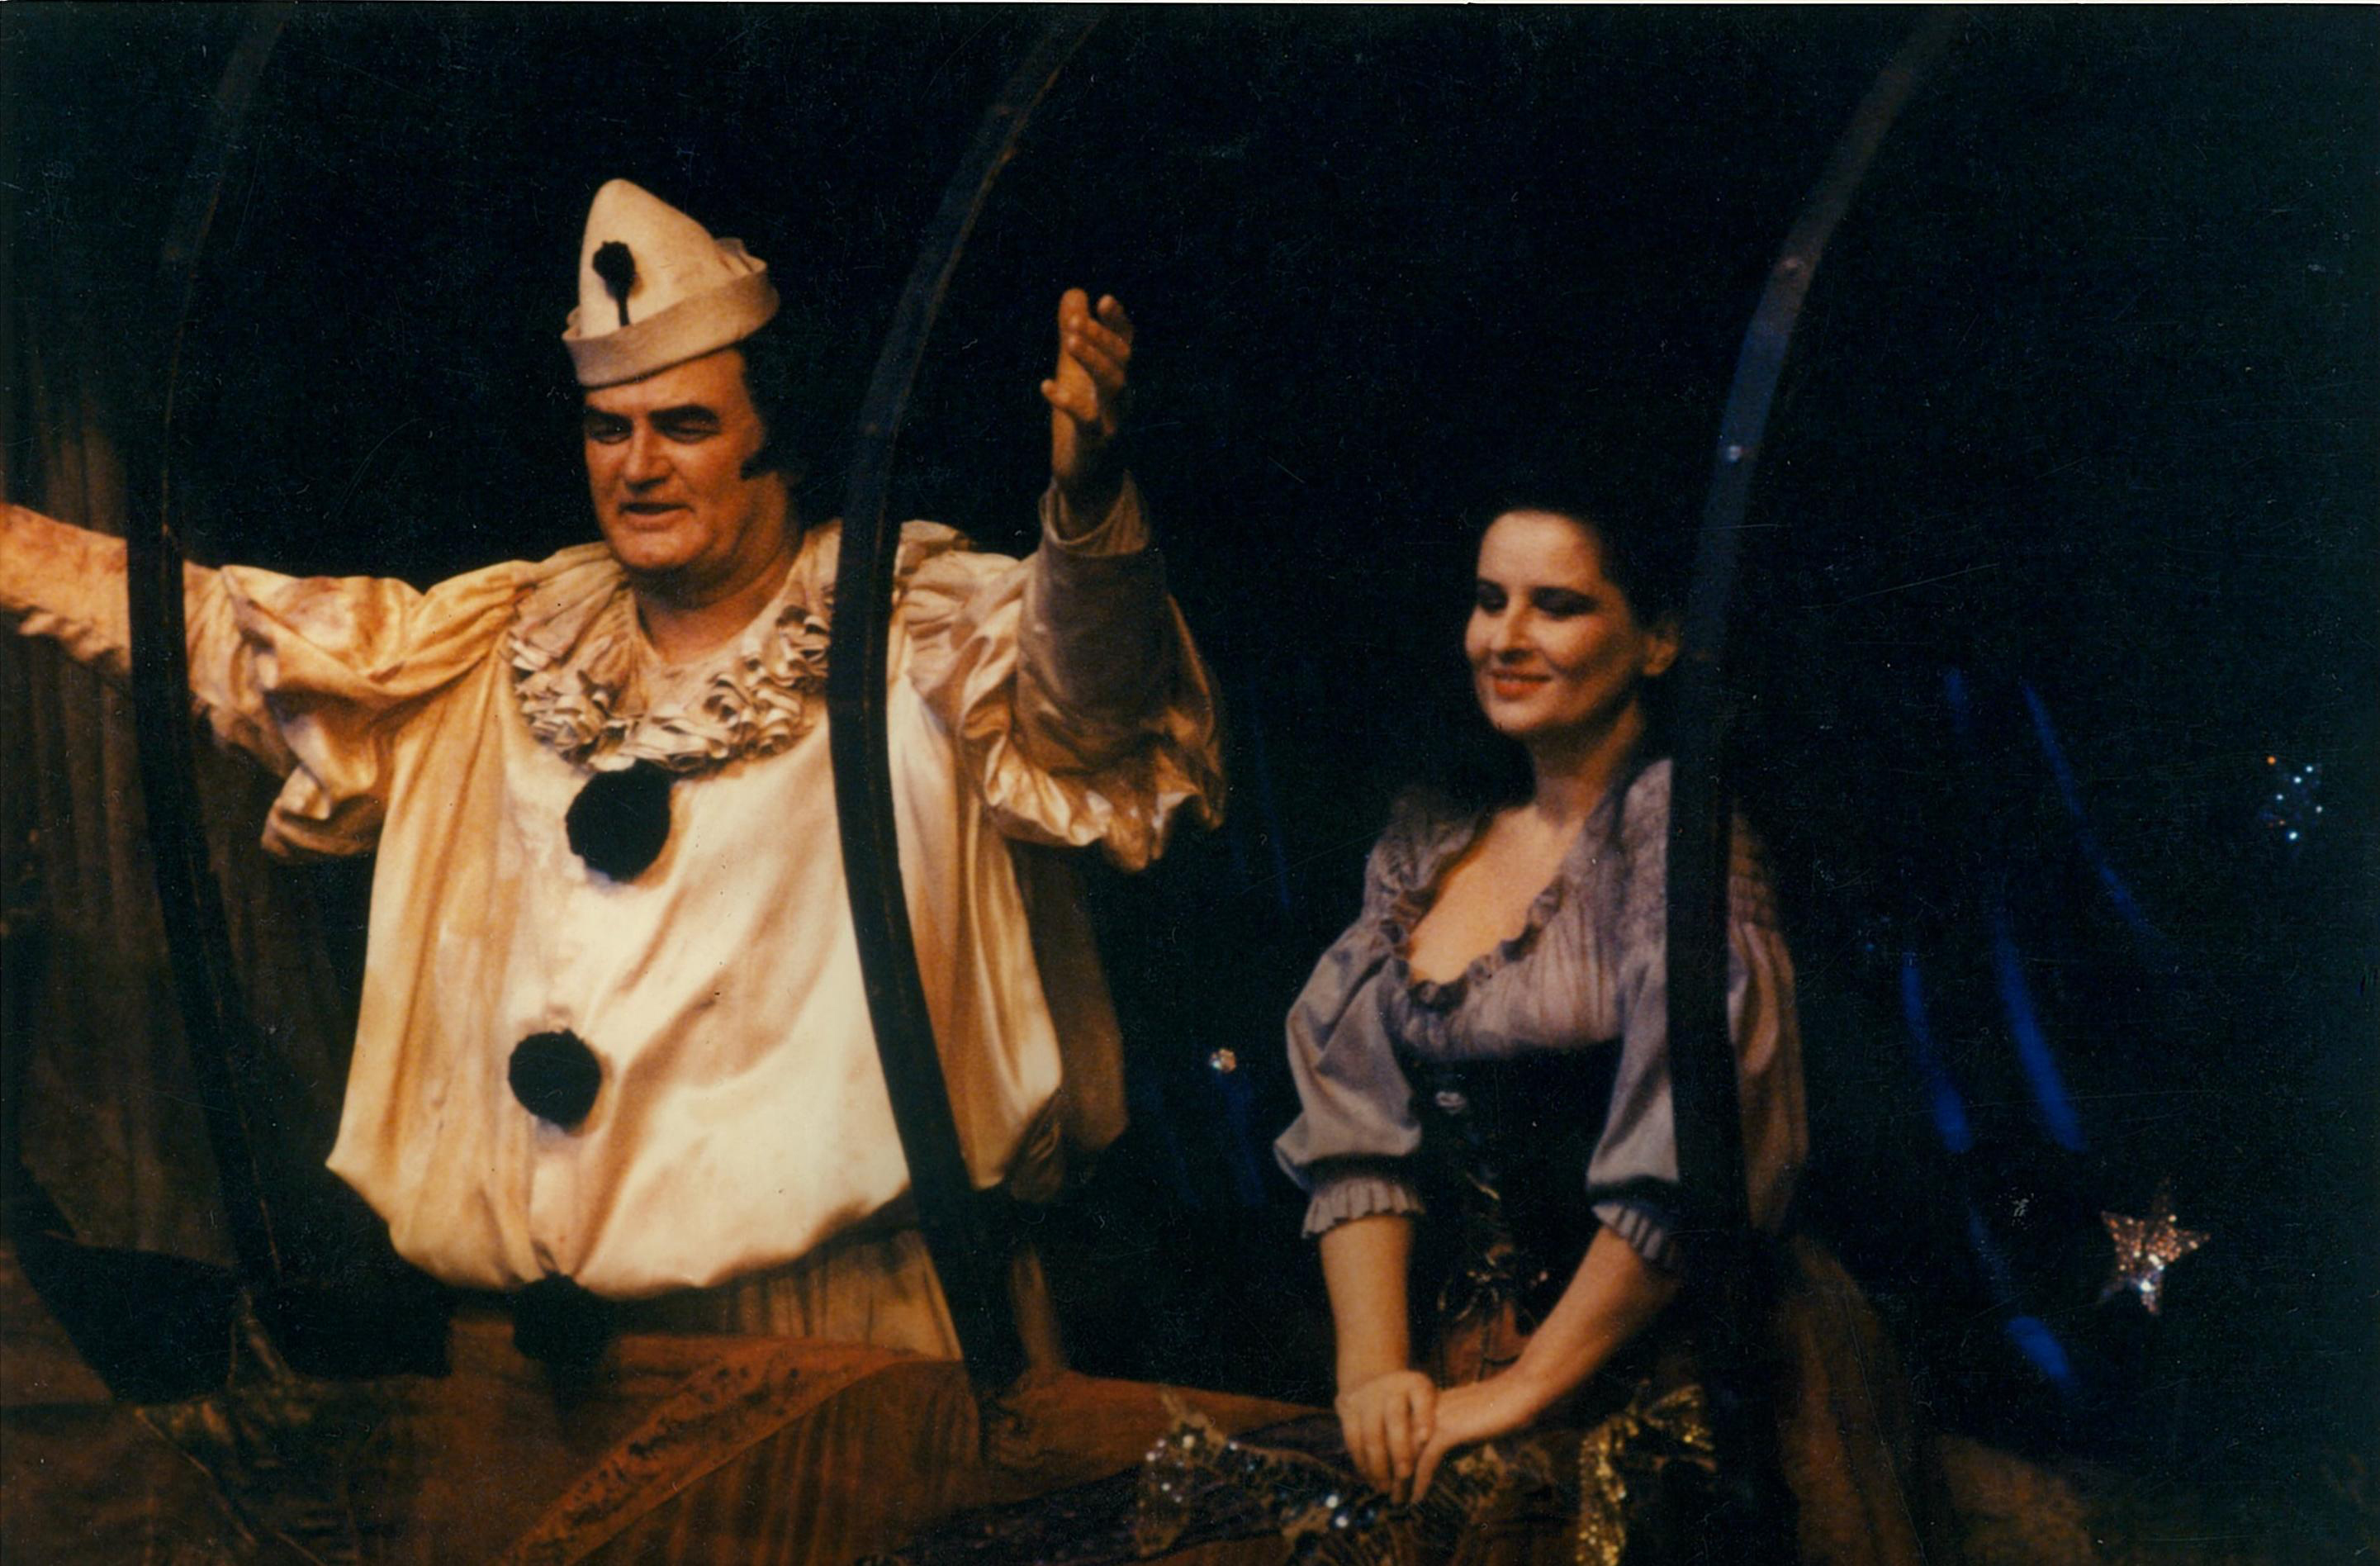 Cu marele tenor John Vickers, Canio, Mariana Nicolesco în rolul Nedda din I Pagliacci de Leoncavallo. Metropolitan Opera, New York